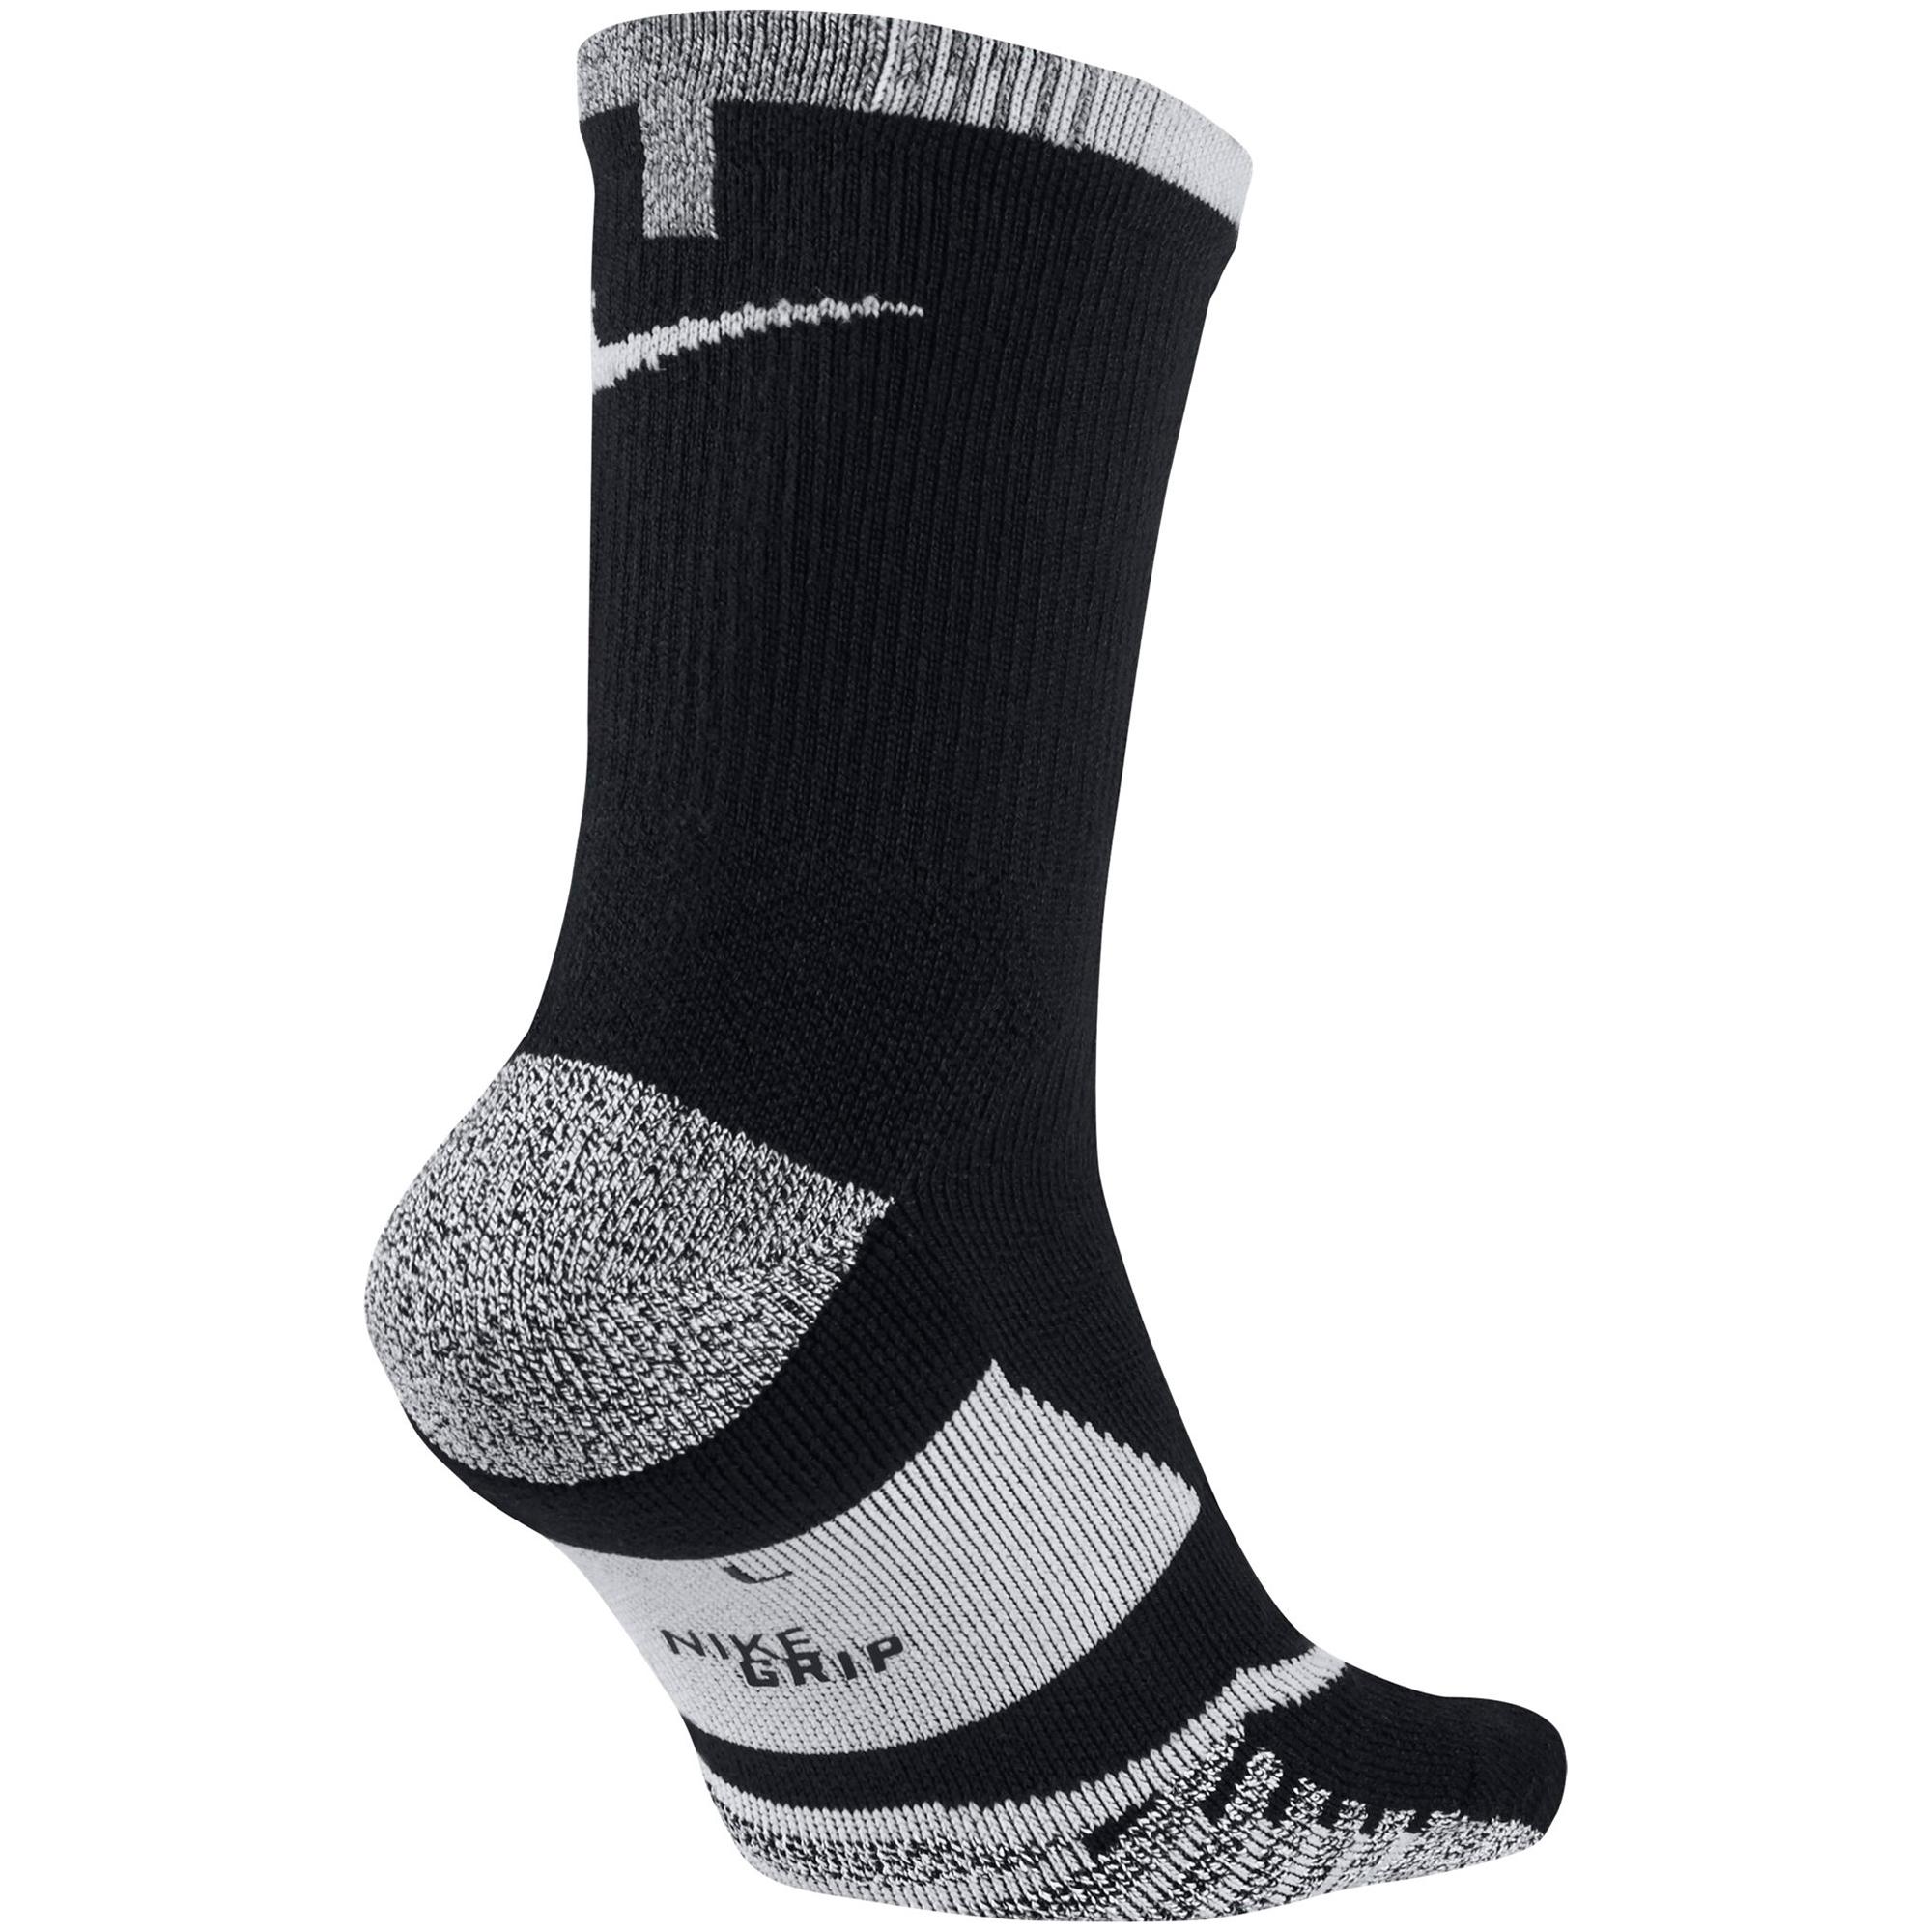 Nike Grip Elite Crew Tennis Socks (1 Pair) - Black/White - Tennisnuts.com